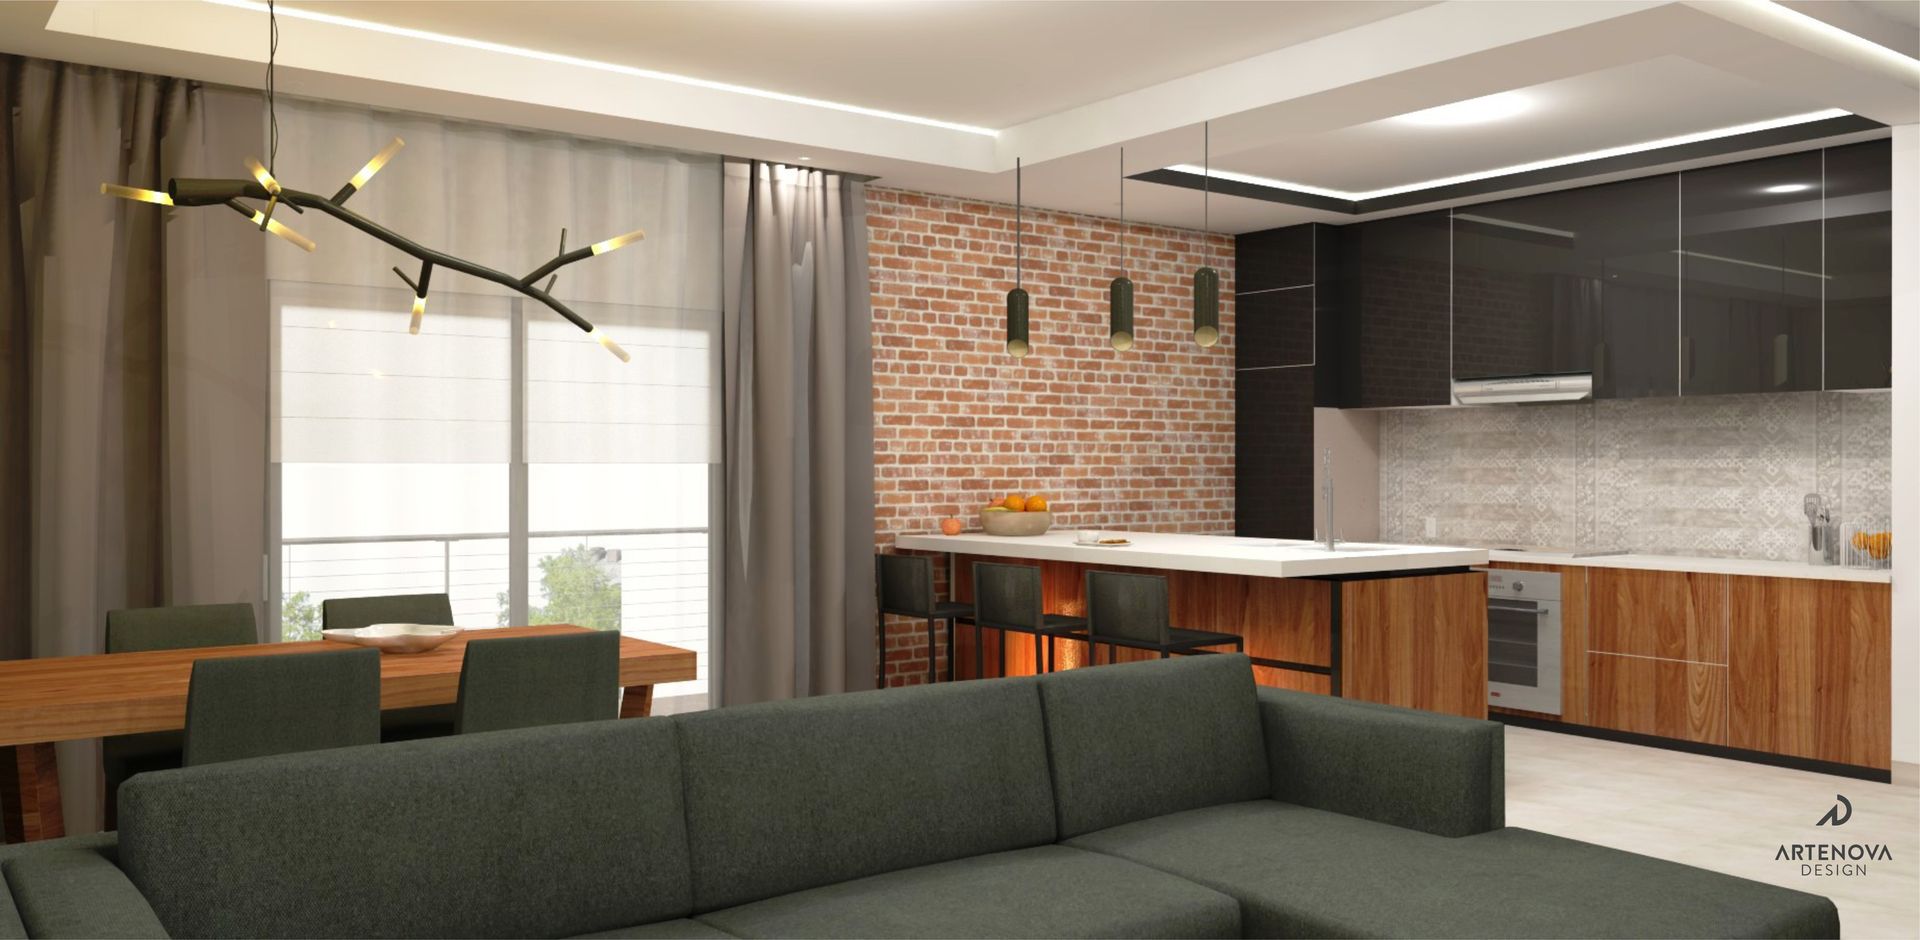 Apartament w Warszawie , Artenova Design Artenova Design Modern kitchen